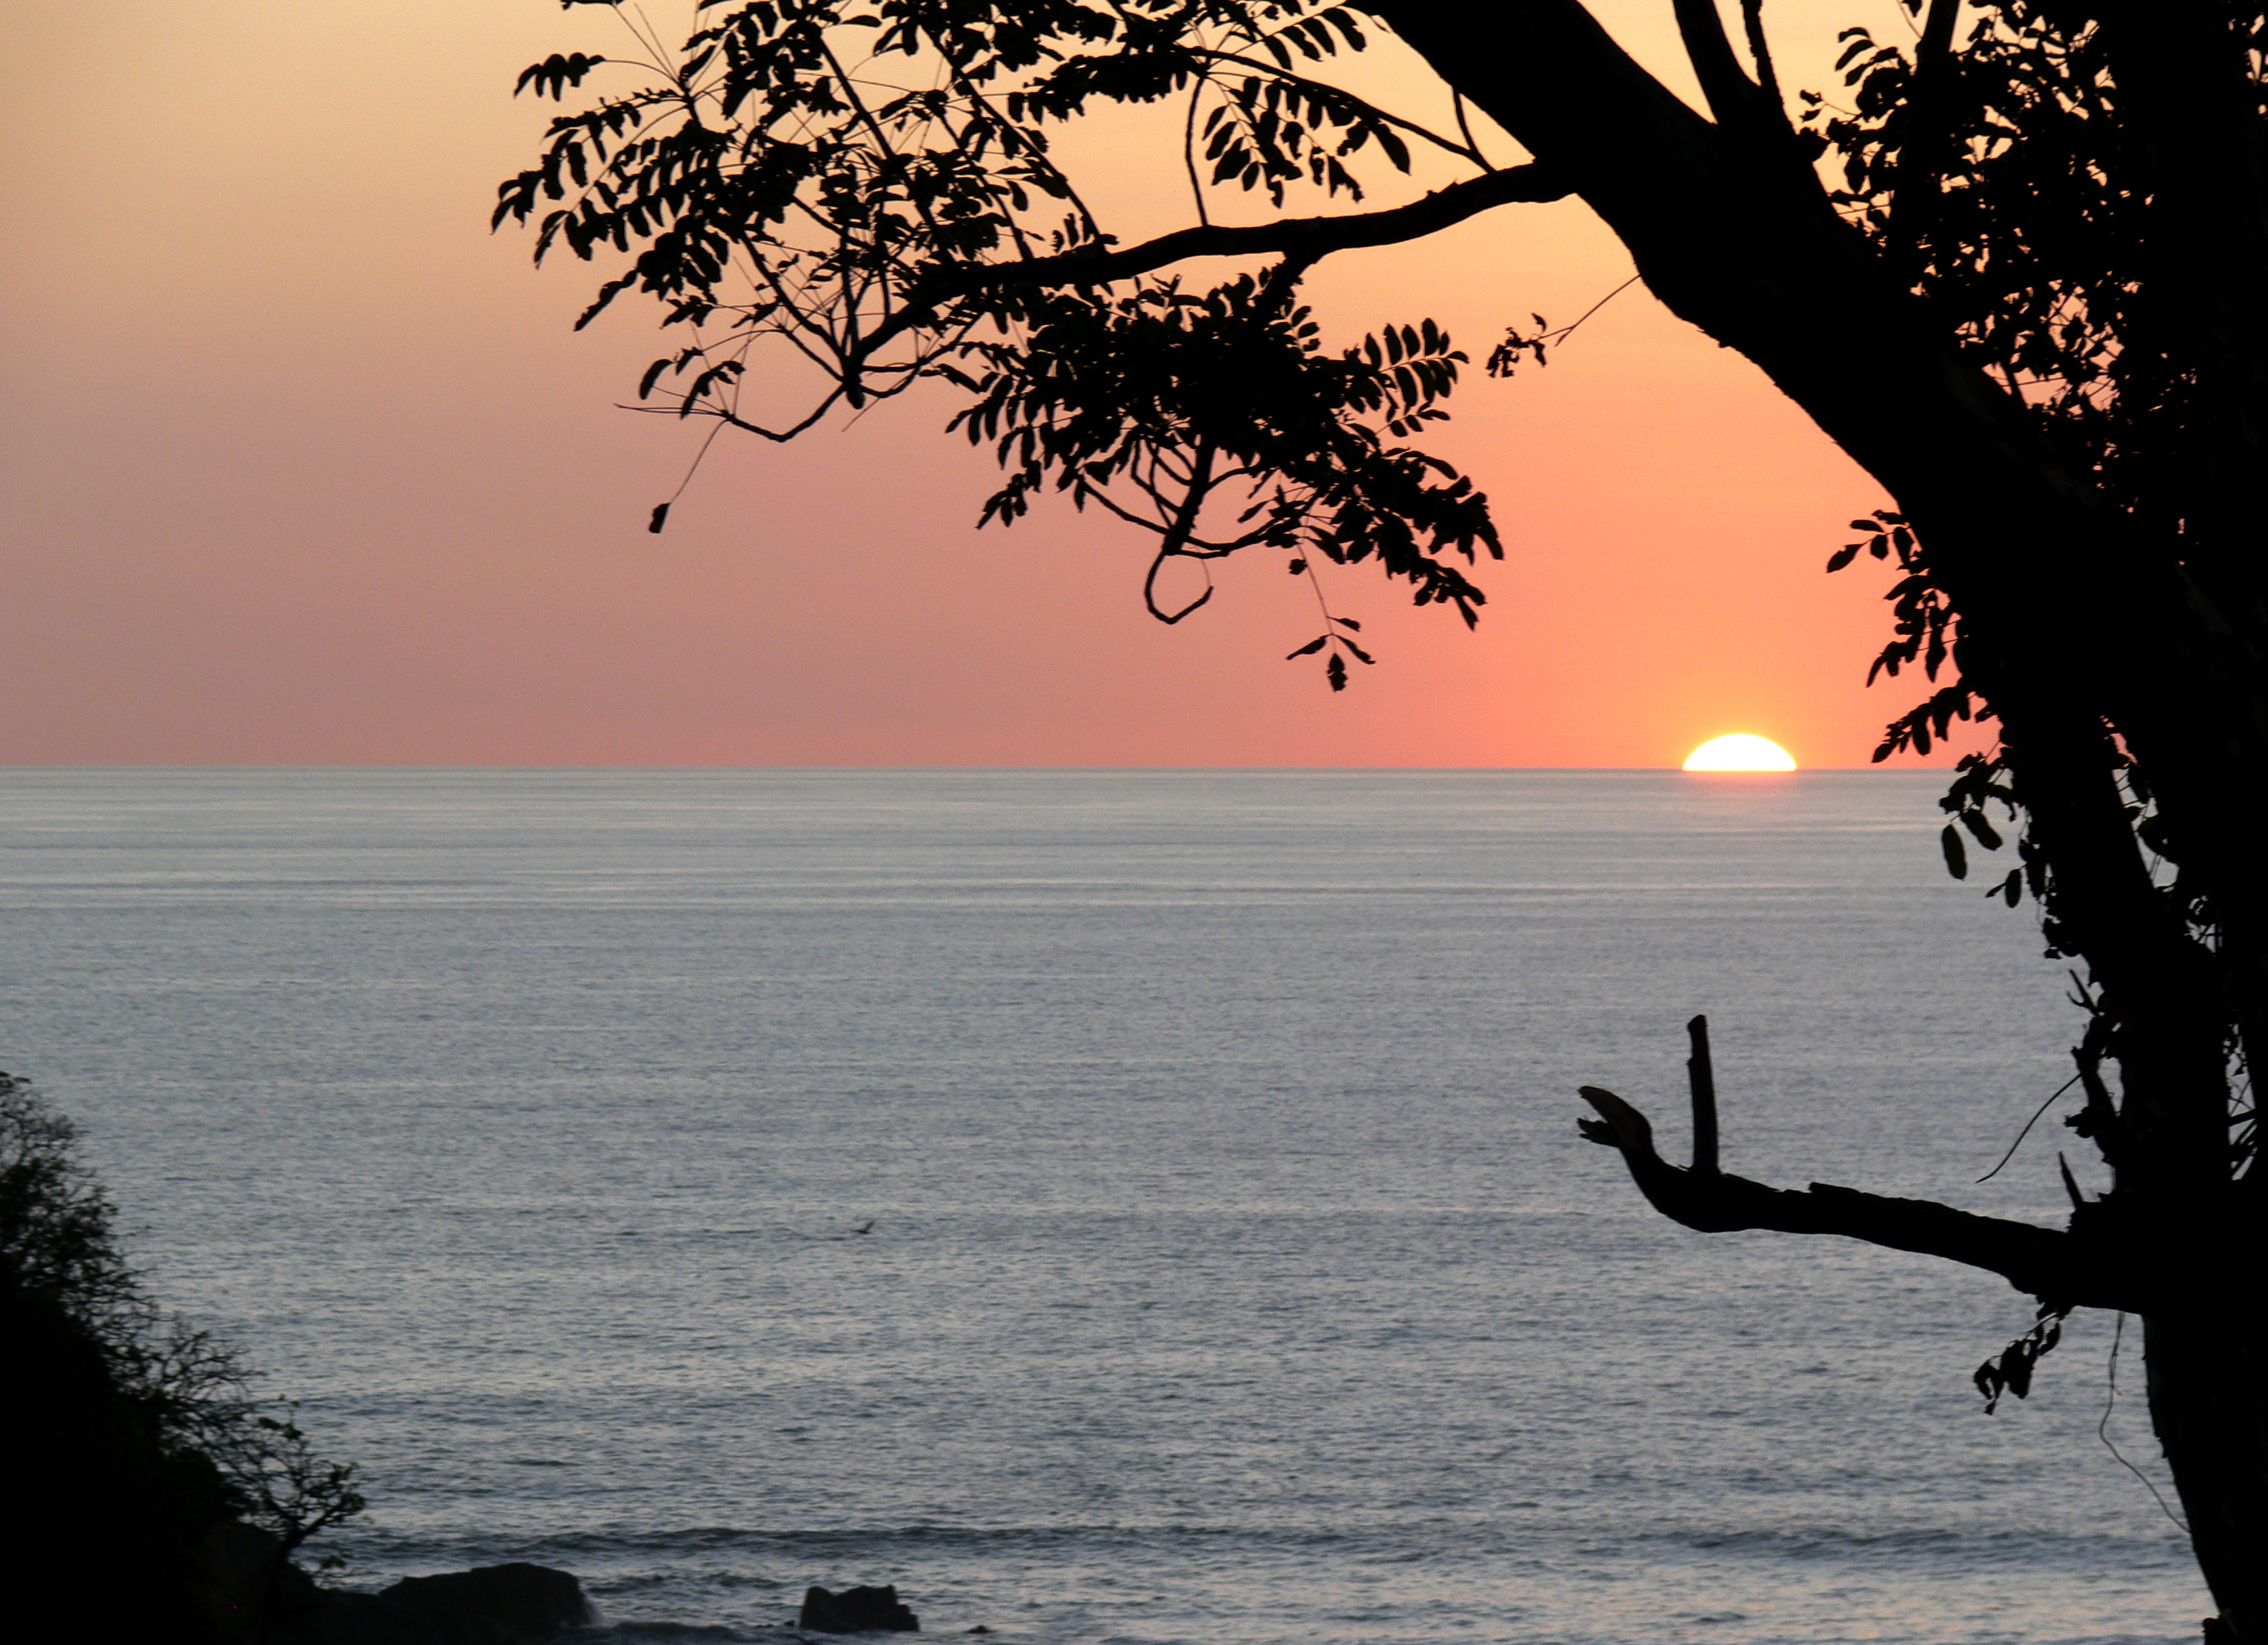 Sunset in costa rica photo